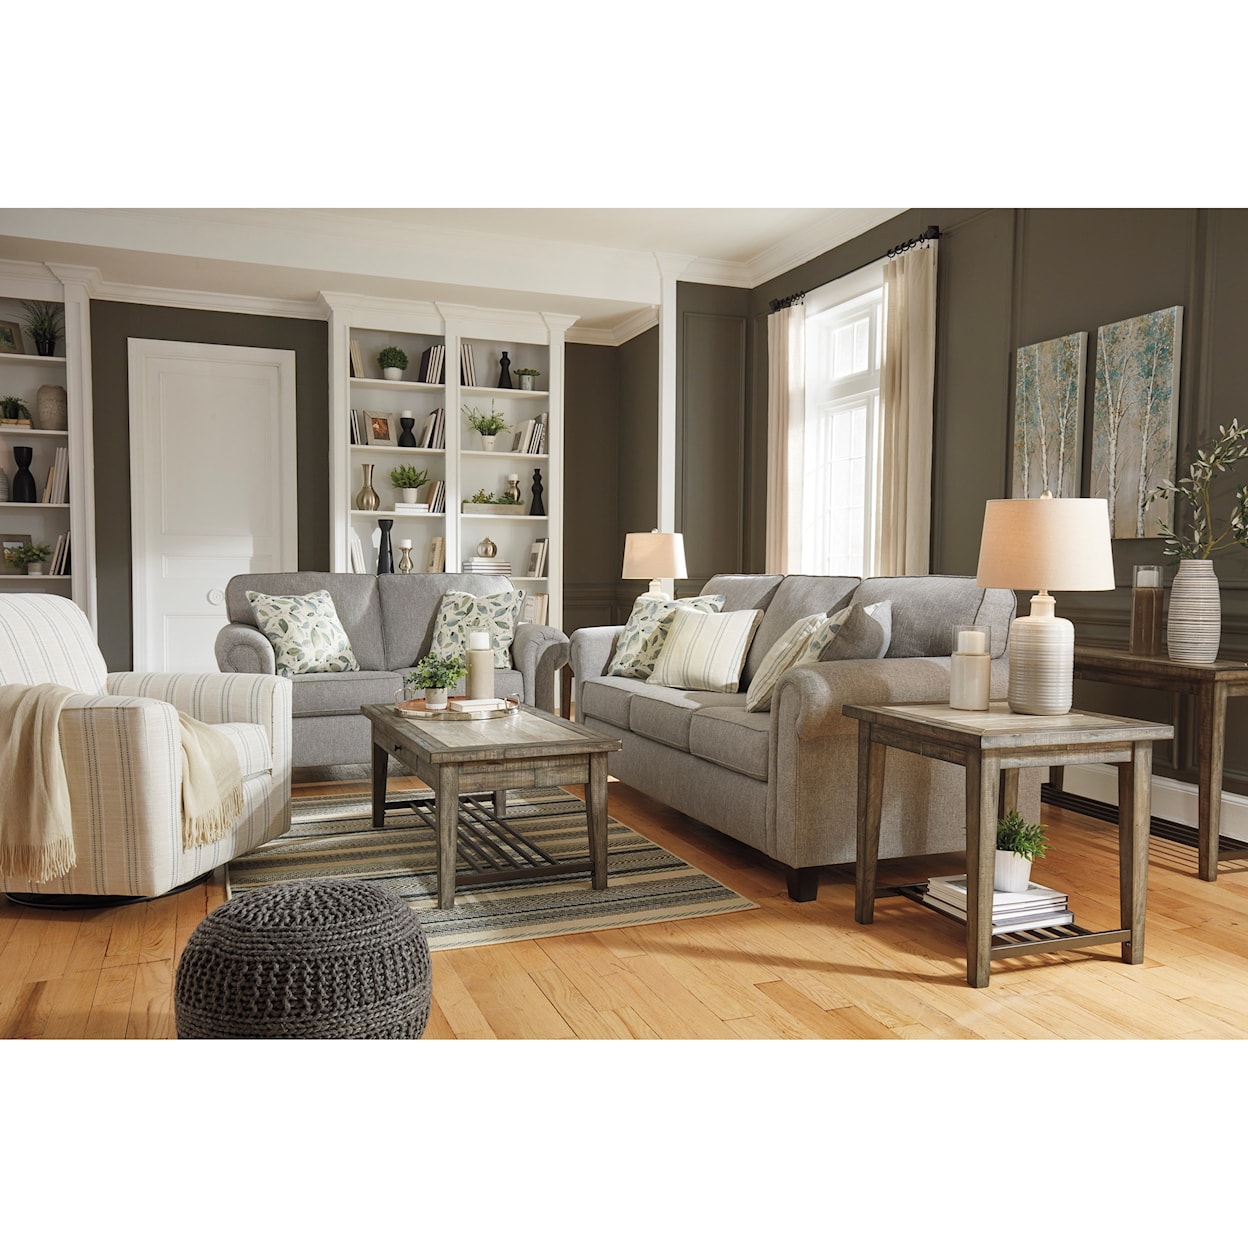 Ashley Furniture Signature Design Alandari Stationary Living Room Group